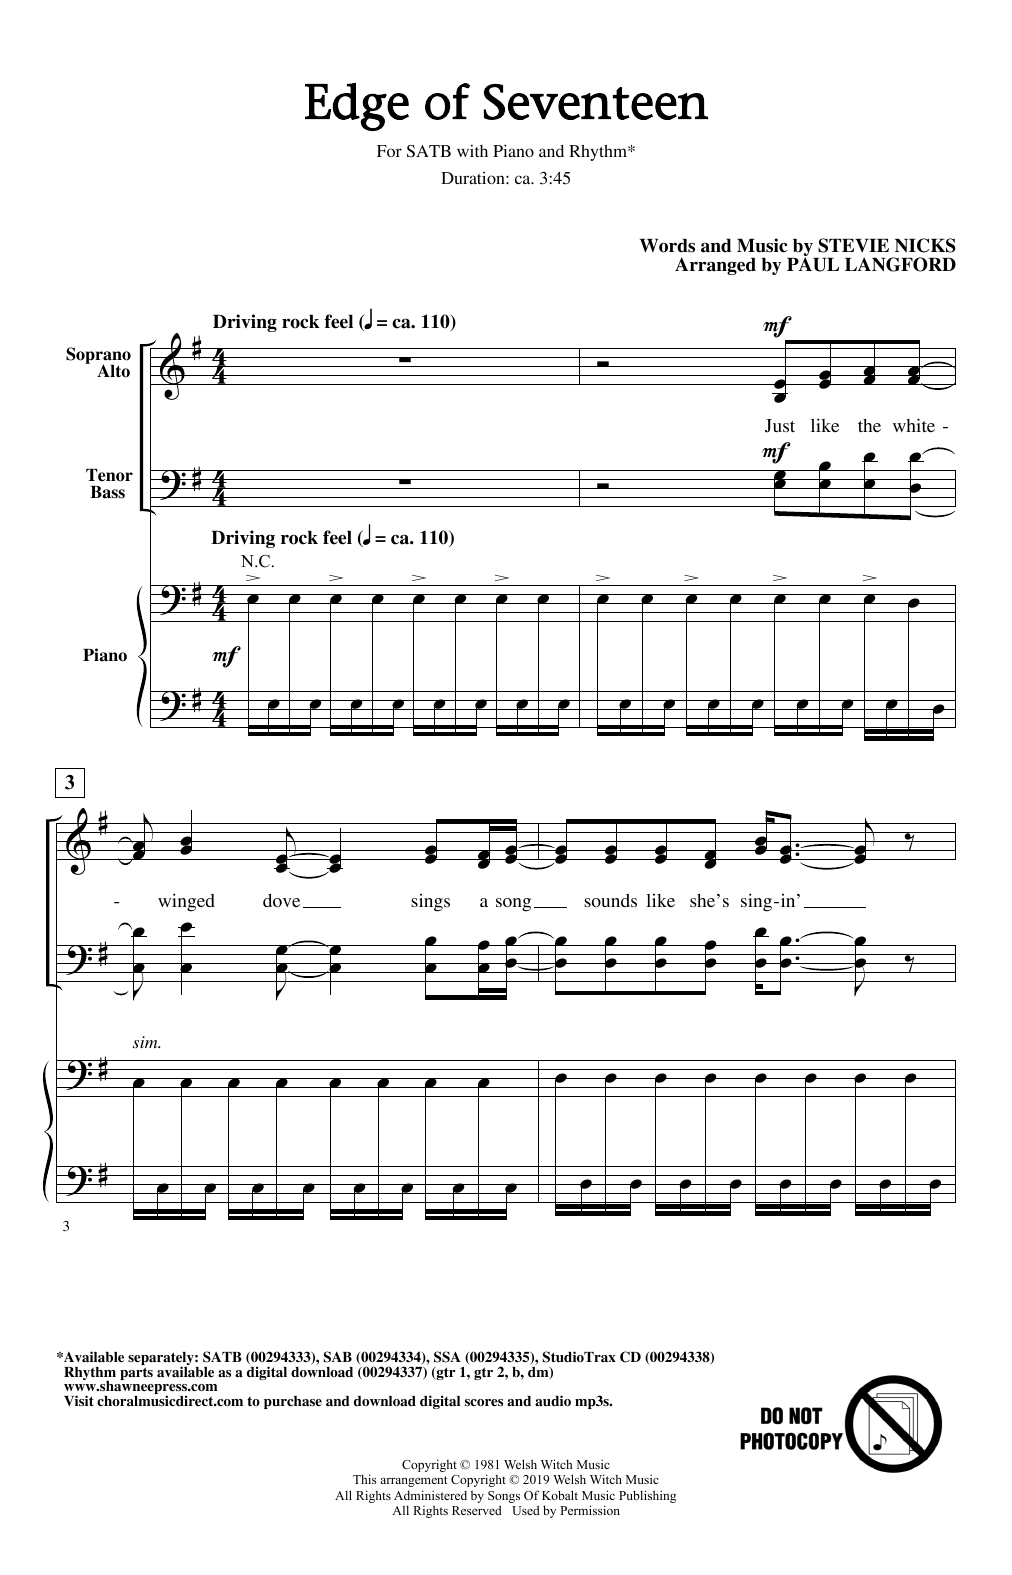 Stevie Nicks Edge Of Seventeen (arr. Paul Langford) sheet music notes and chords arranged for SATB Choir